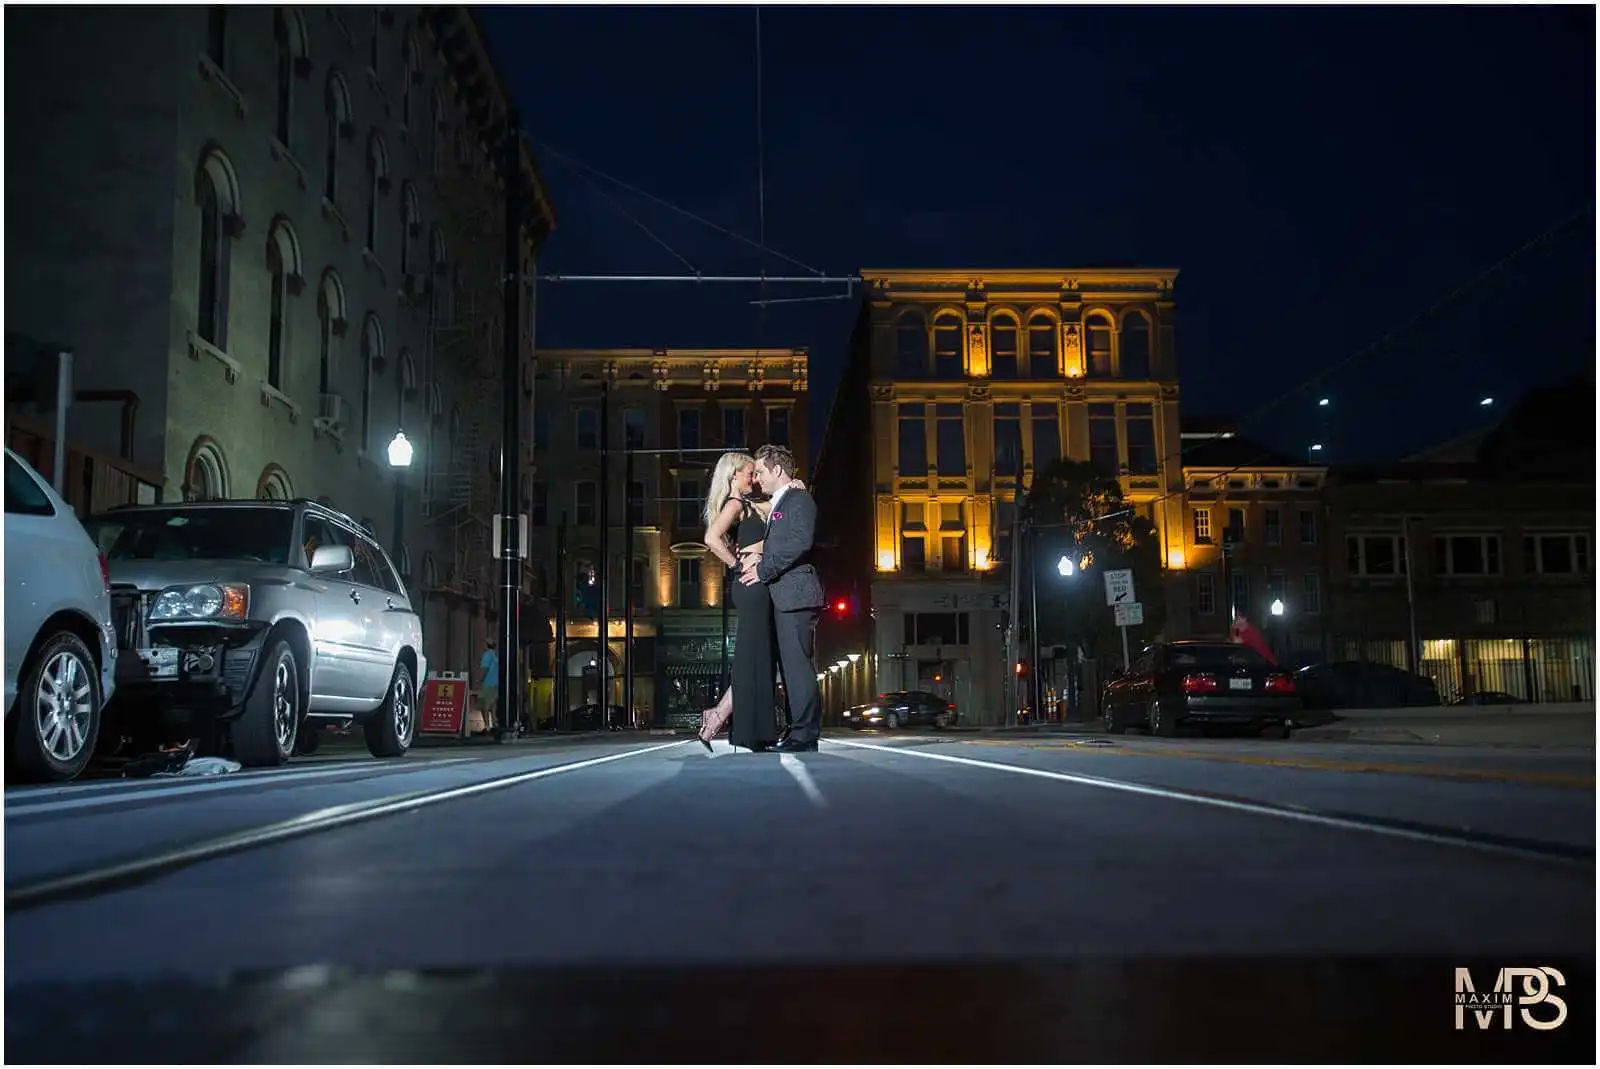 Romantic engagement photo at night in Cincinnatis OTR district.